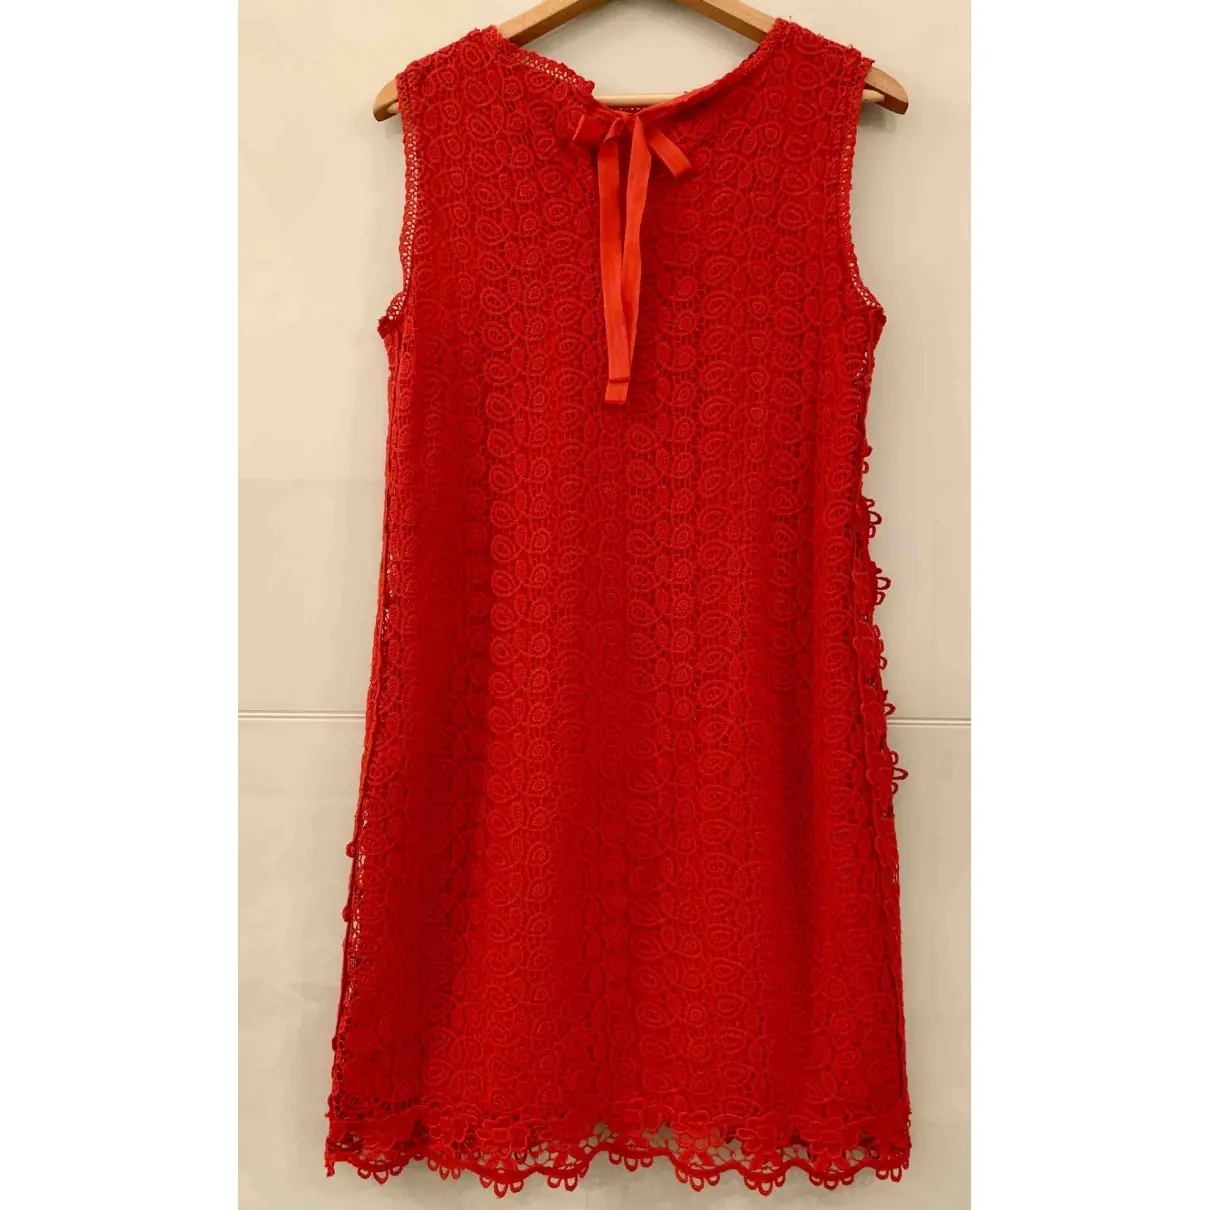 Massimo Dutti Mid-length dress for sale